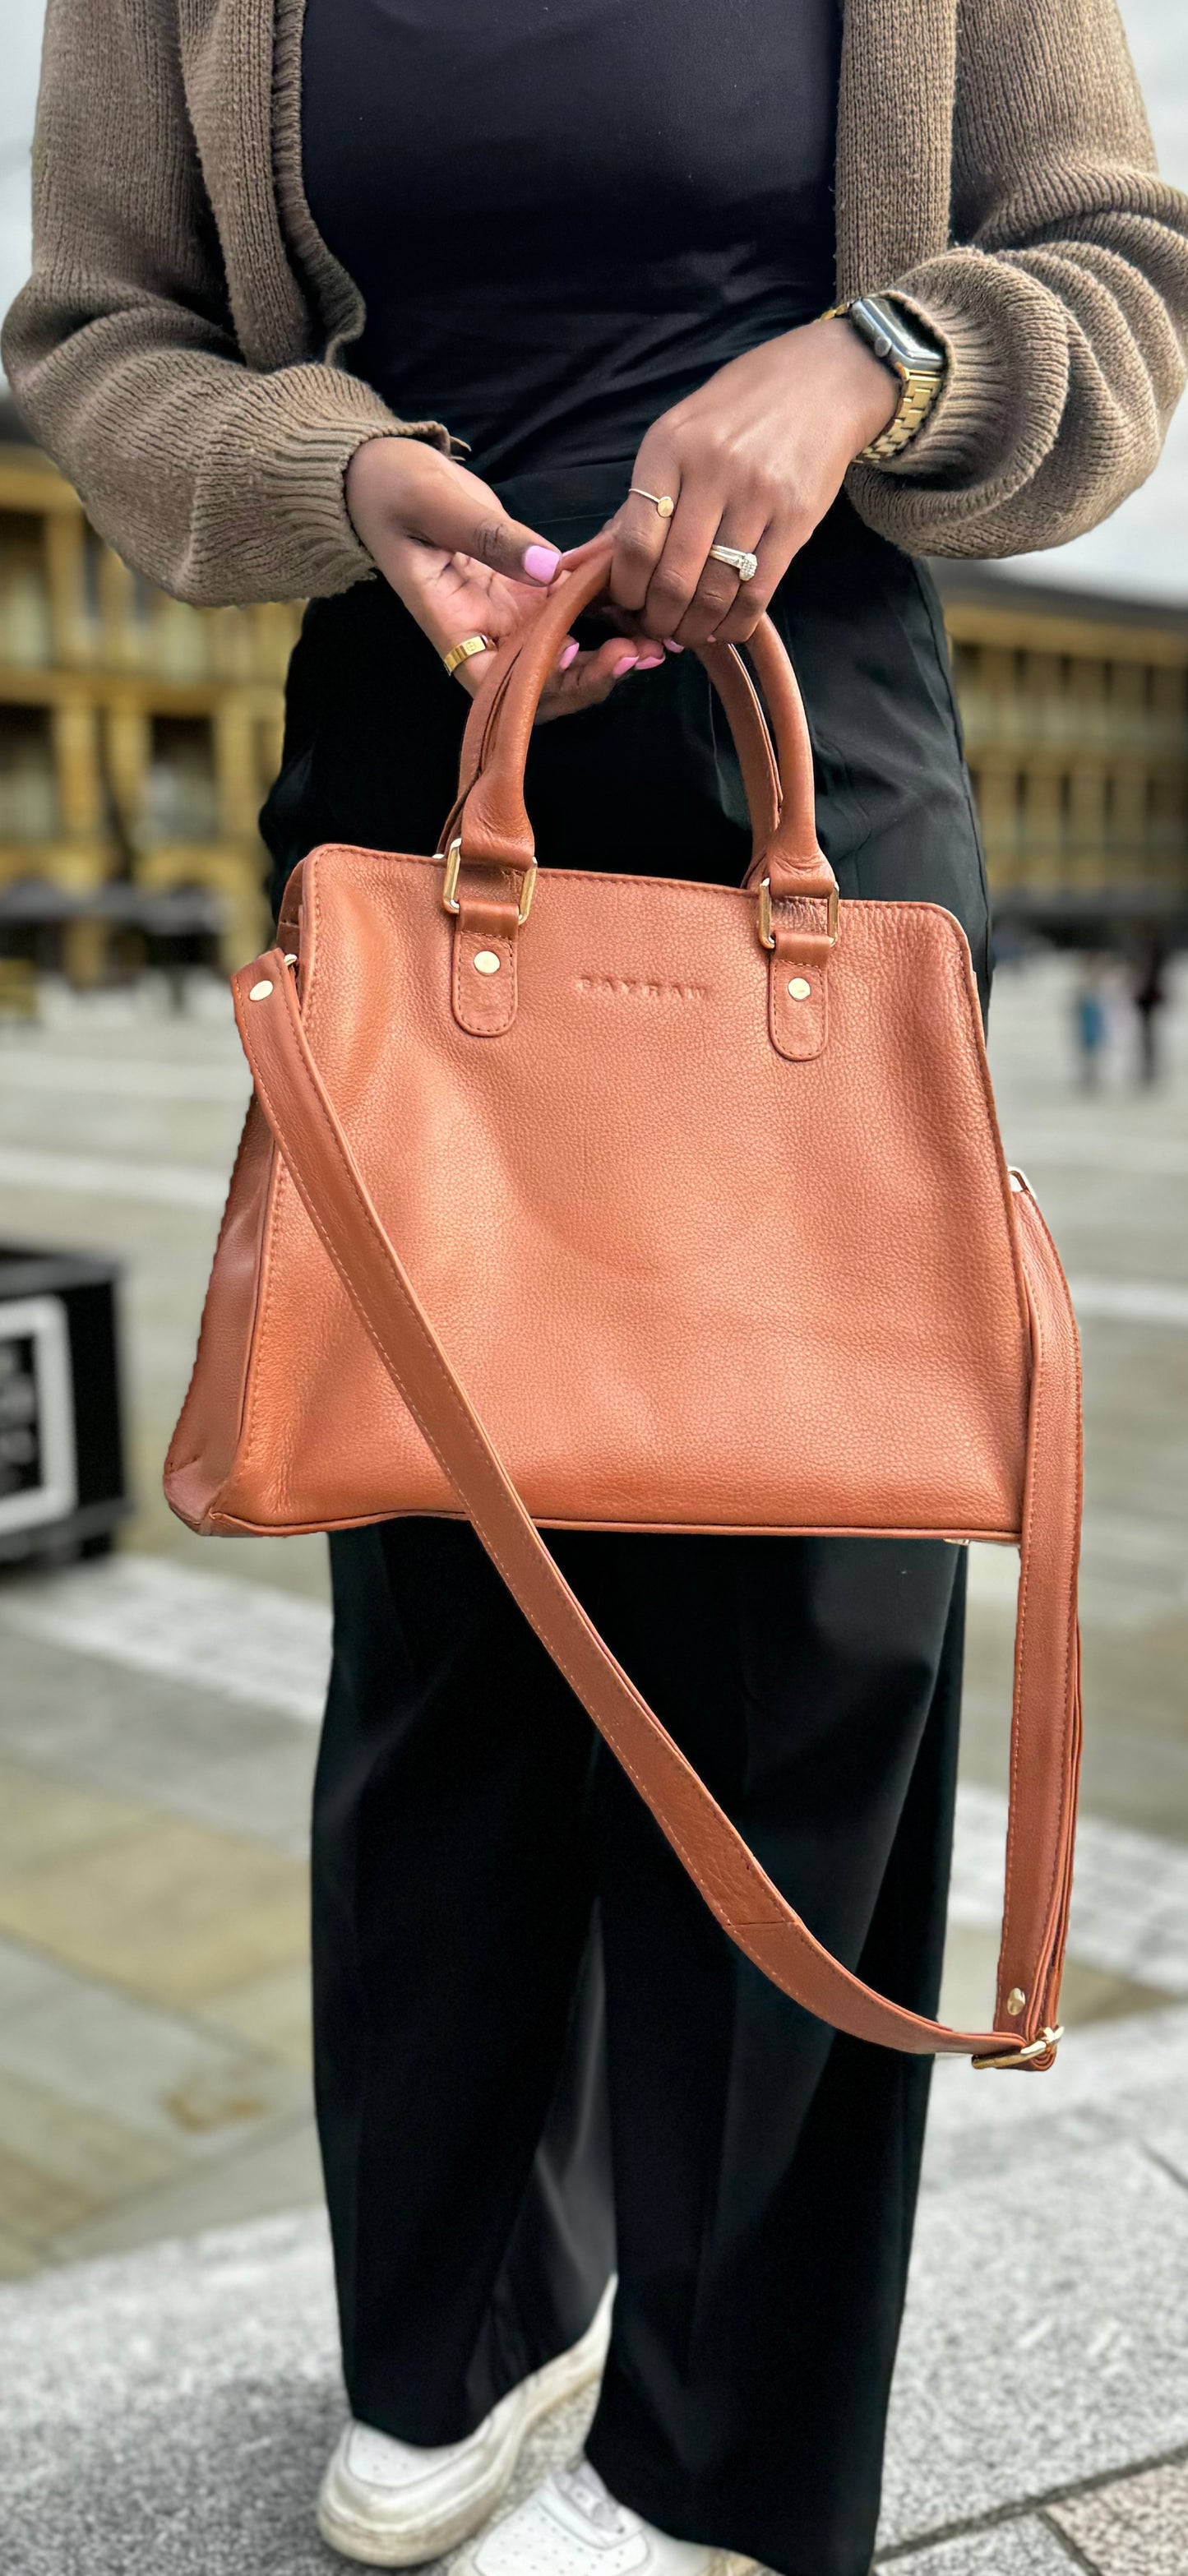 The Leather Satchel Handbag - BAYRAW 